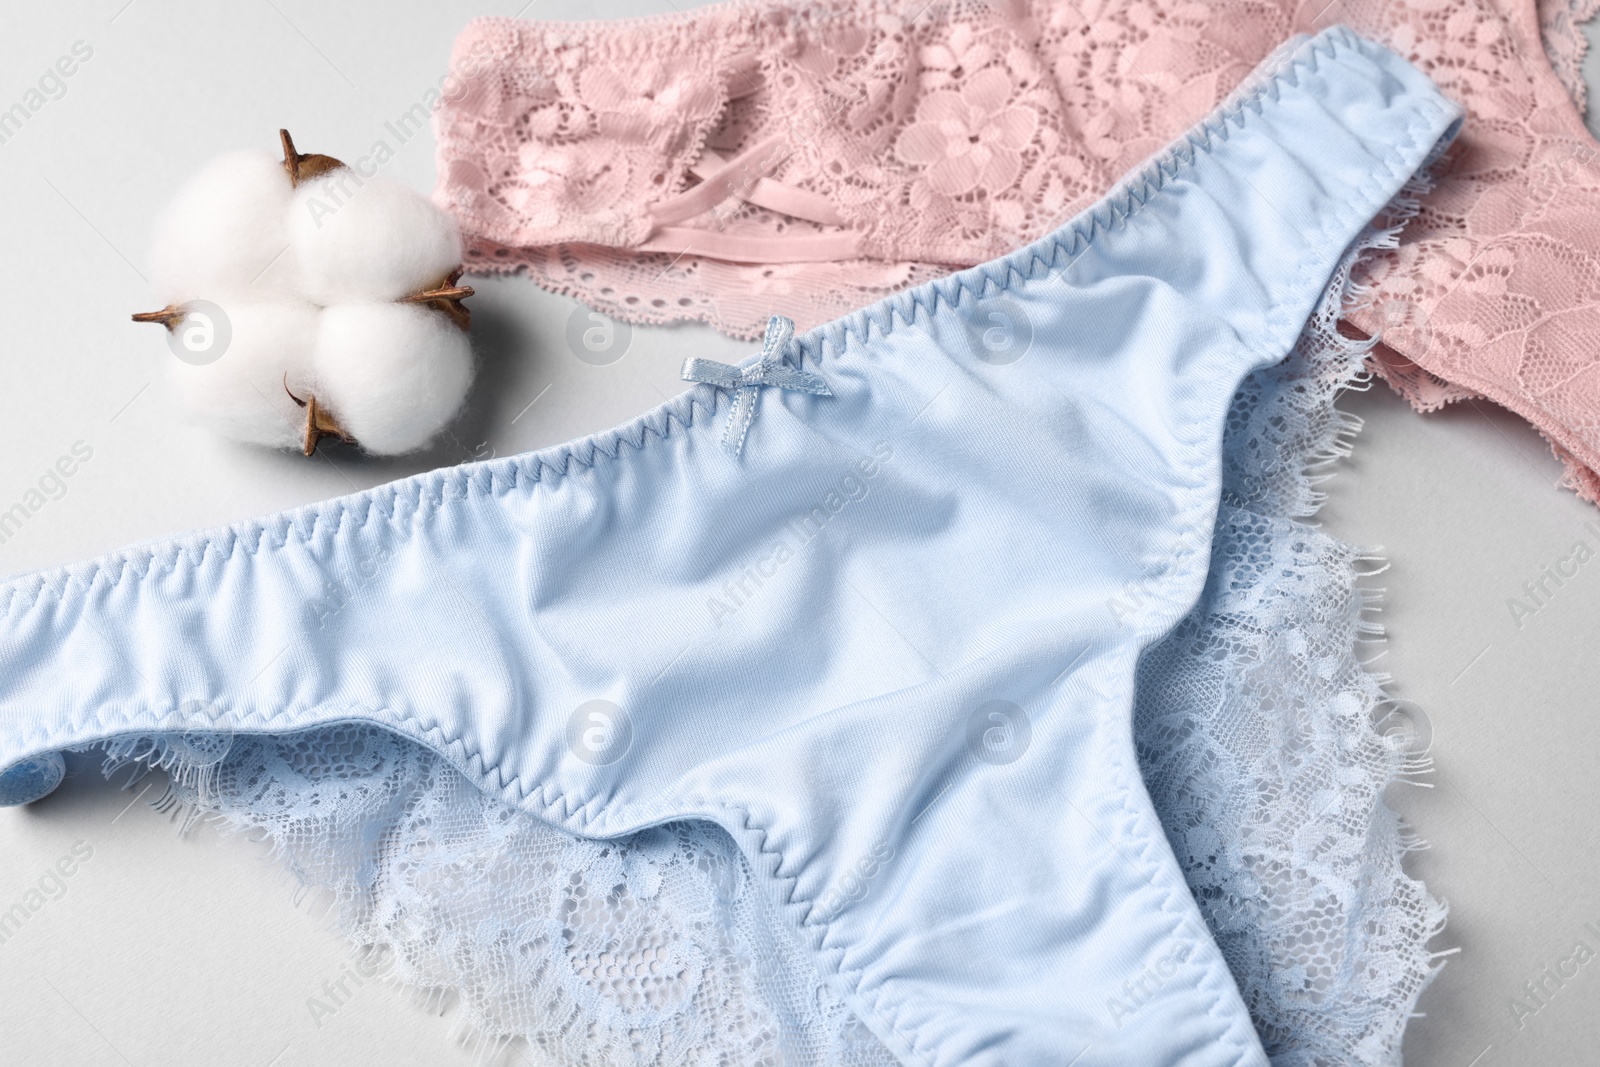 Photo of Women's underwear and cotton flower on light grey background, closeup